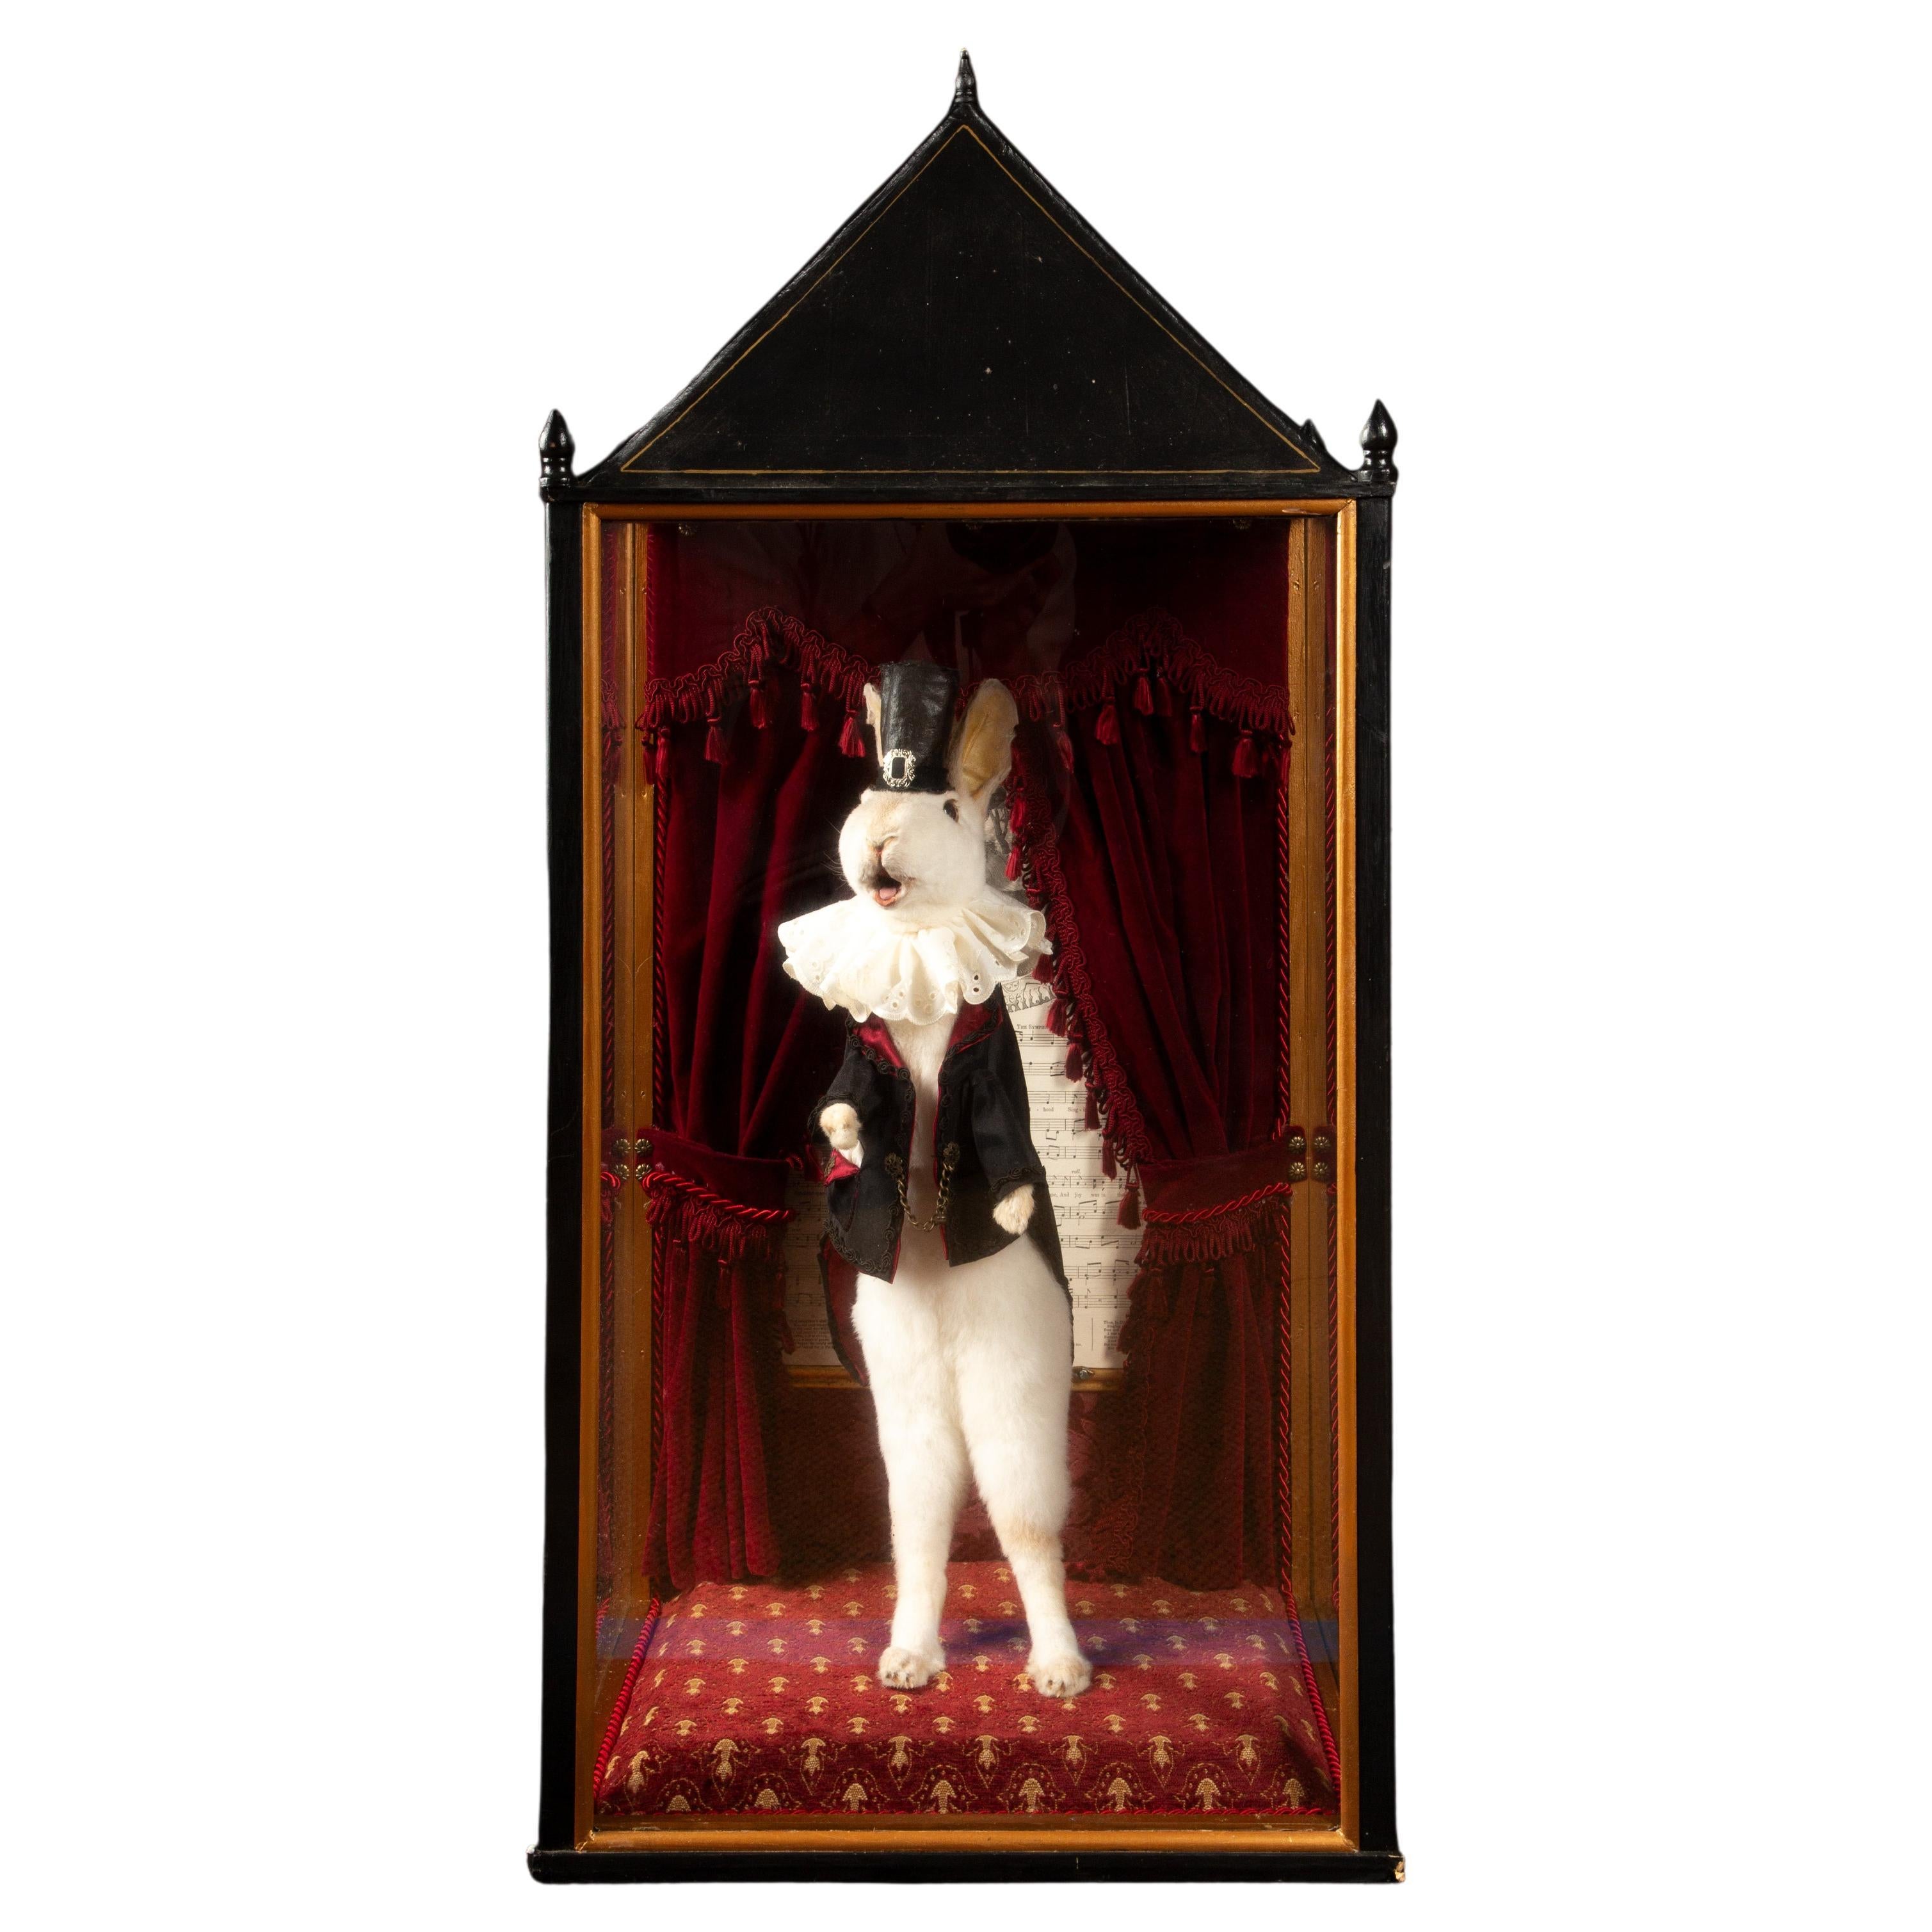 Illusions enchantées : Taxidermy Magician Rabbit Diorama